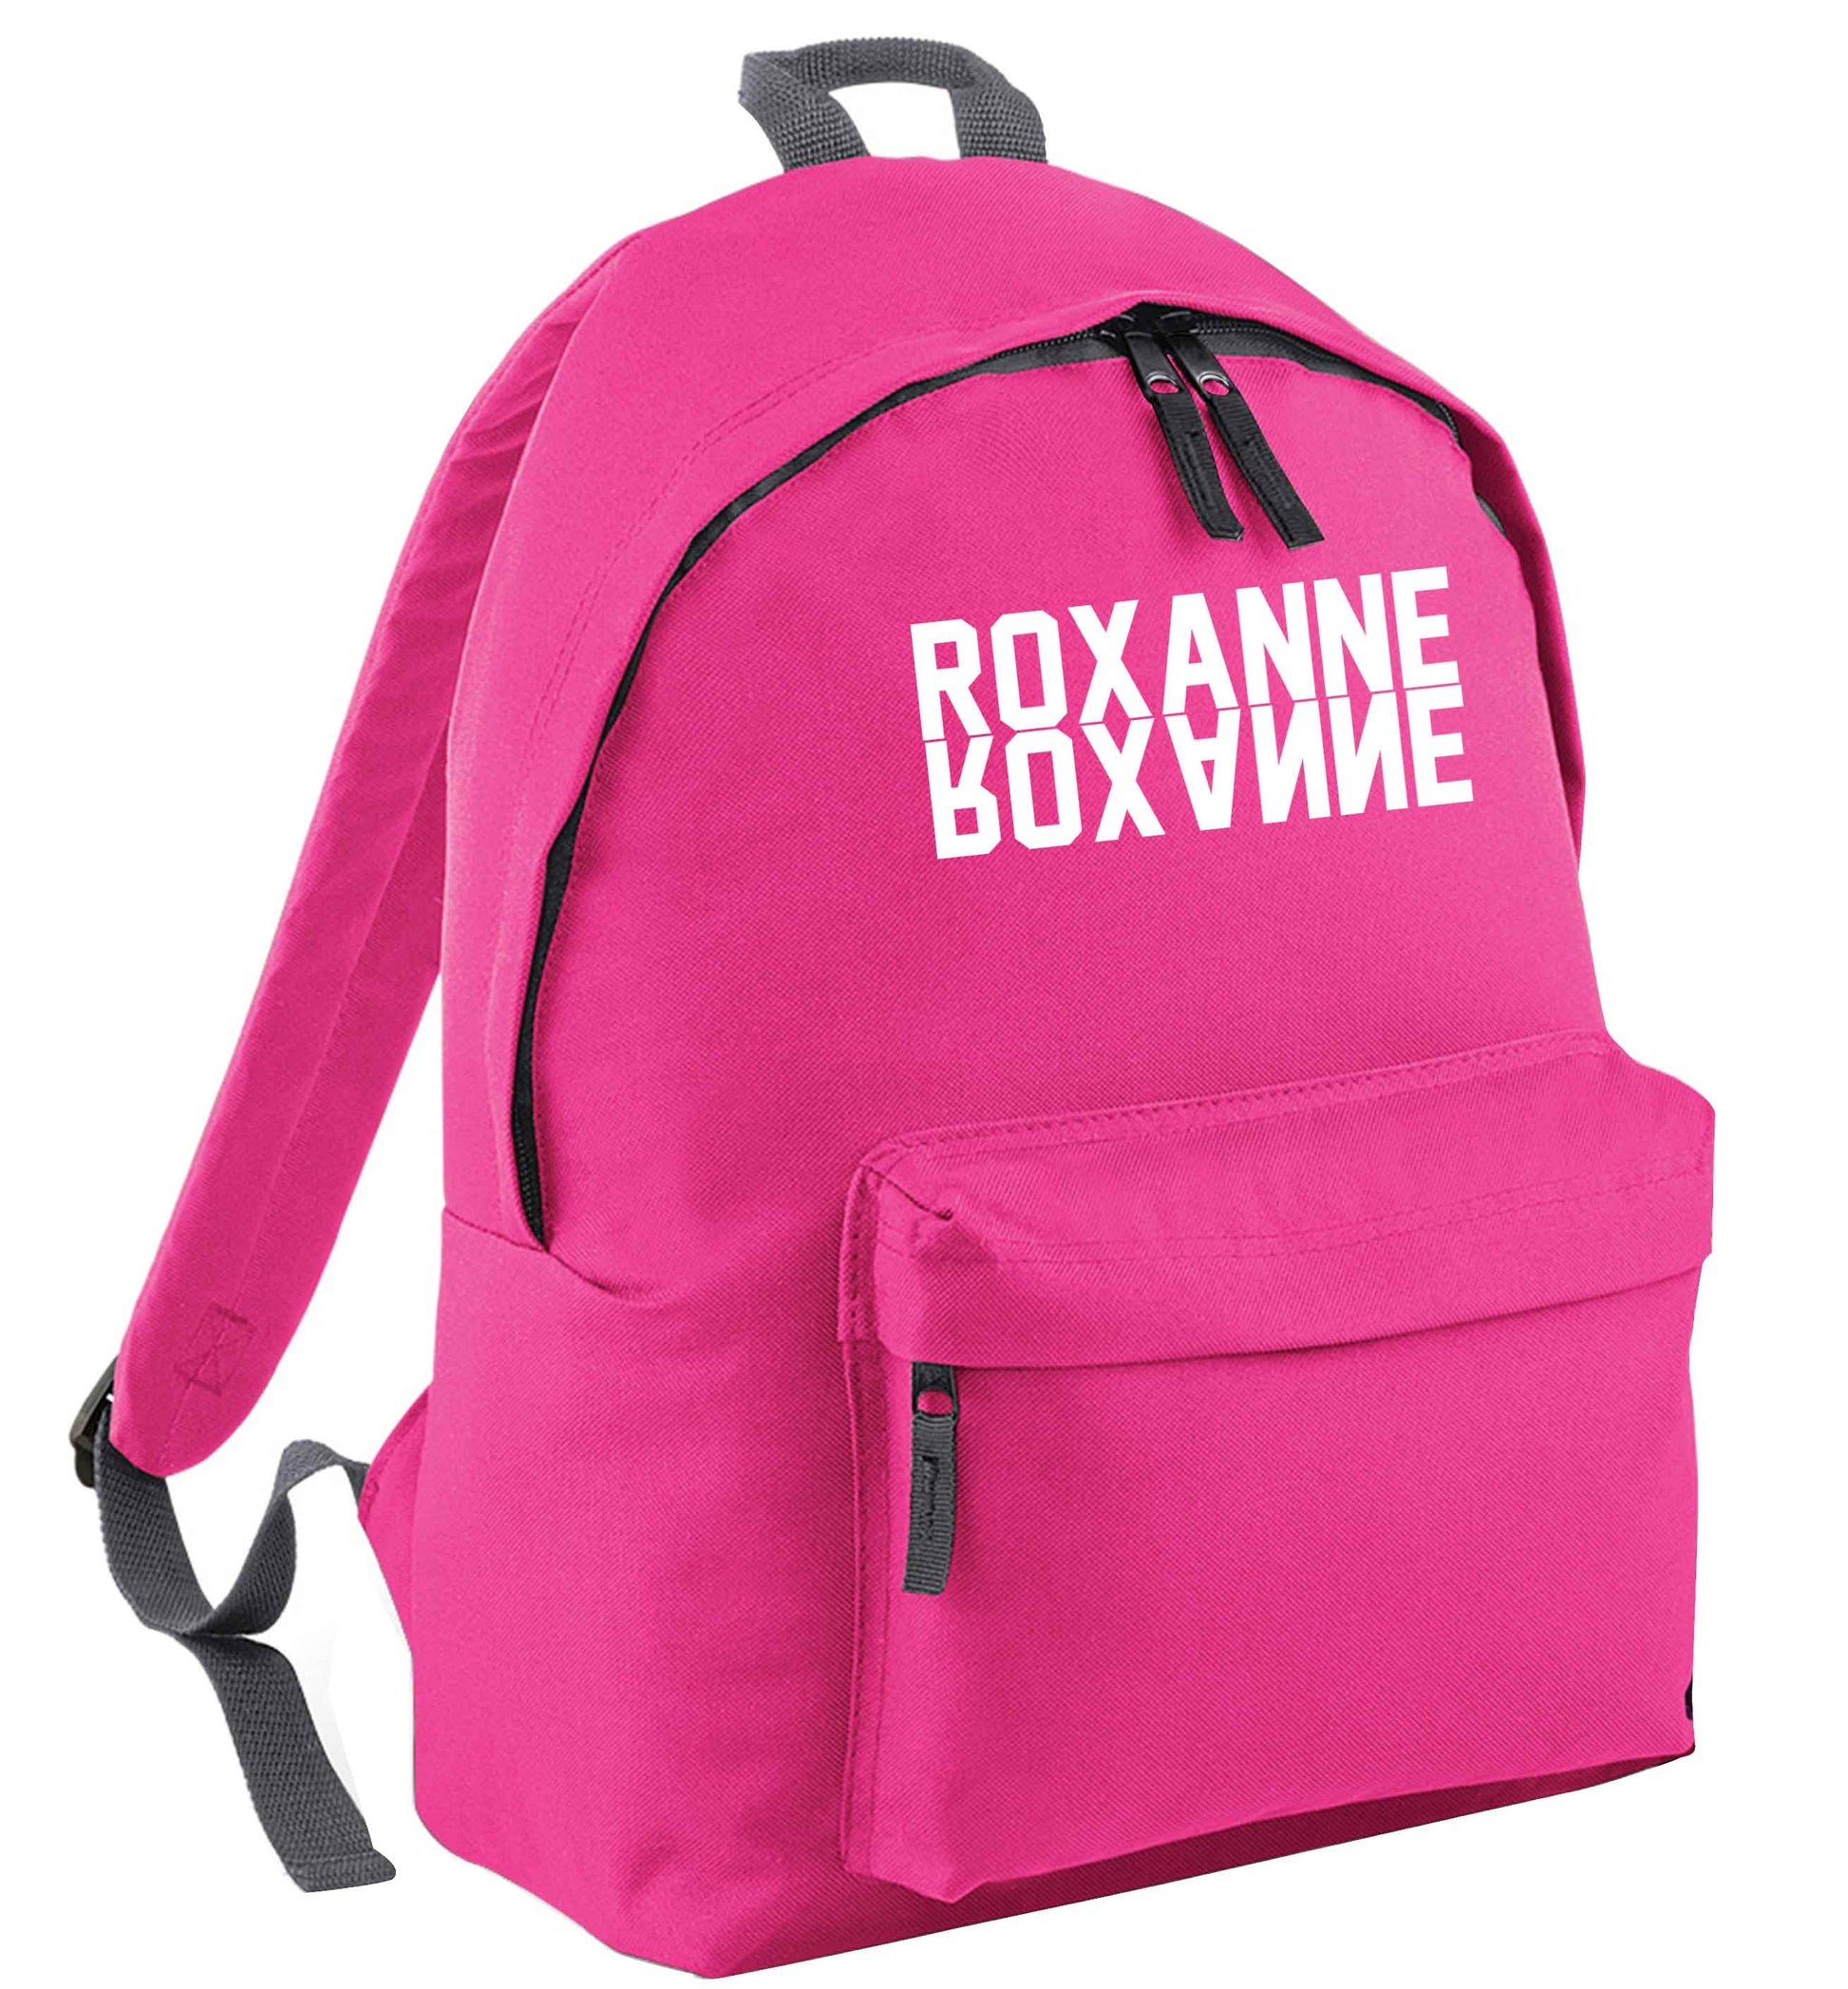 Misheard song lyrics - check!  pink adults backpack